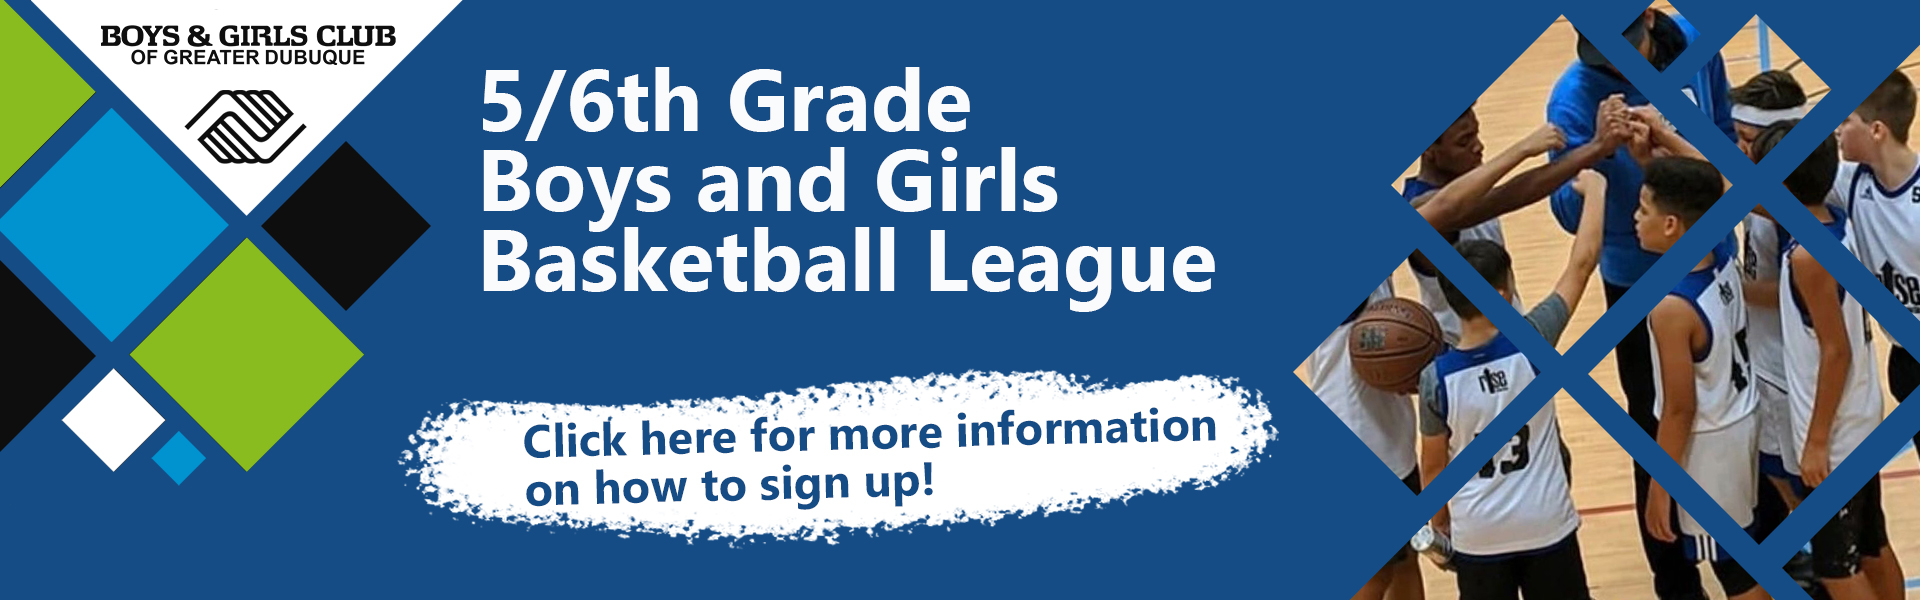 5/6th Grade Boys and Girls Basketball League